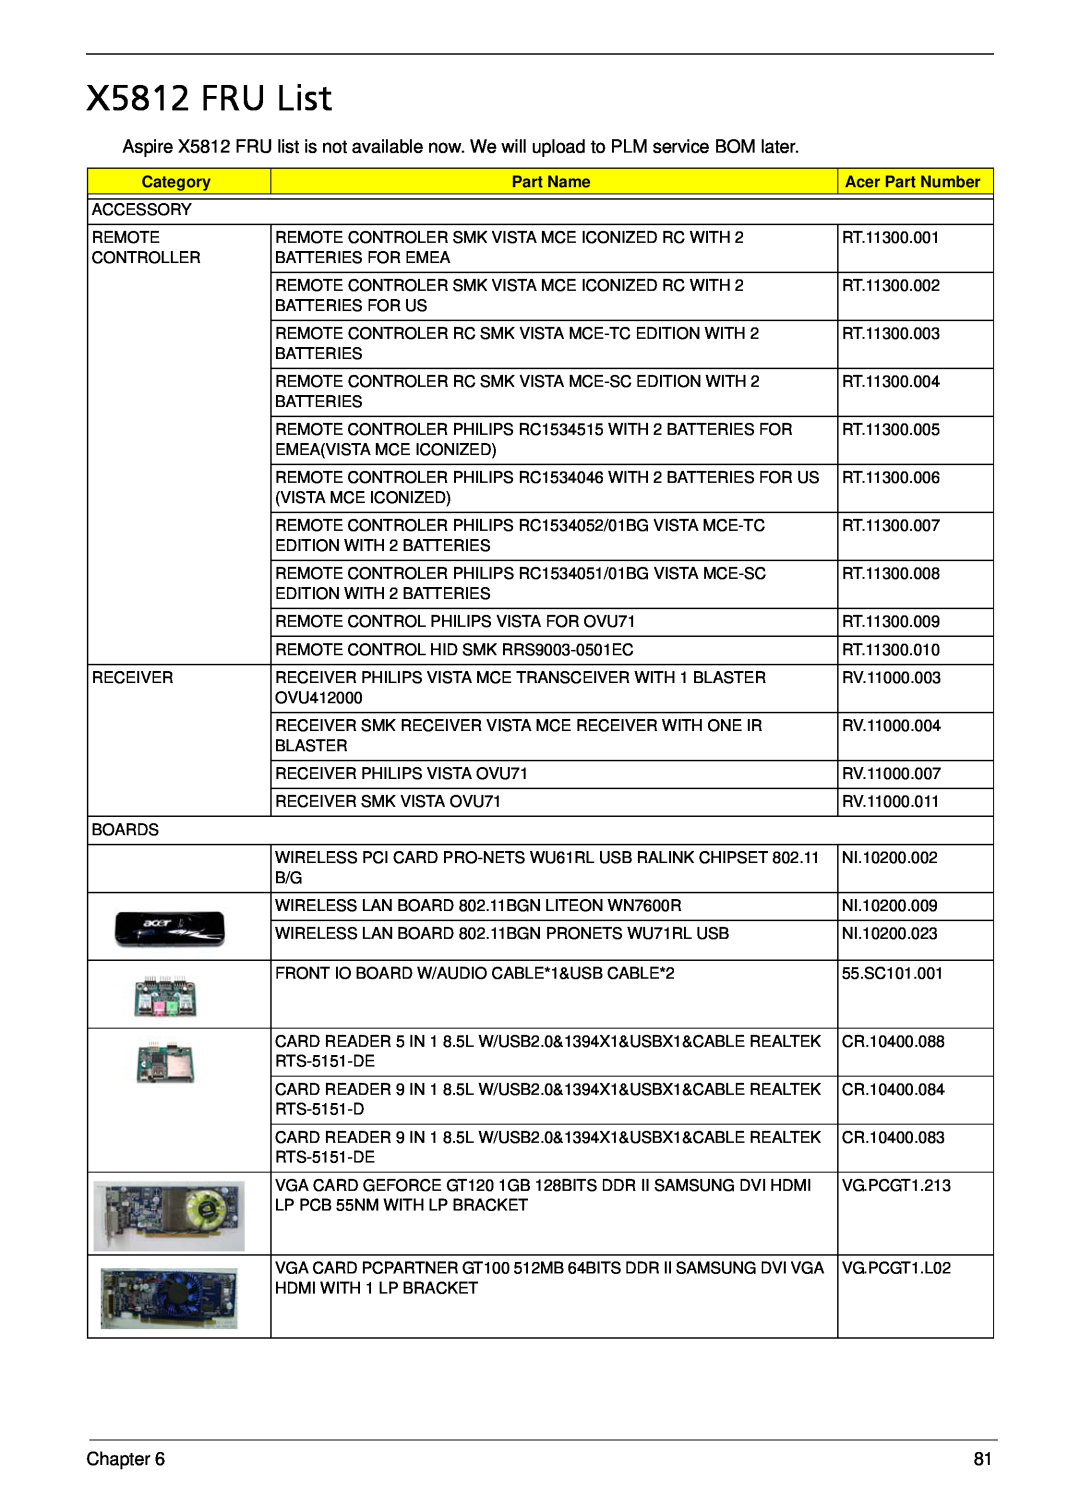 Acer X3812 manual X5812 FRU List, Chapter 